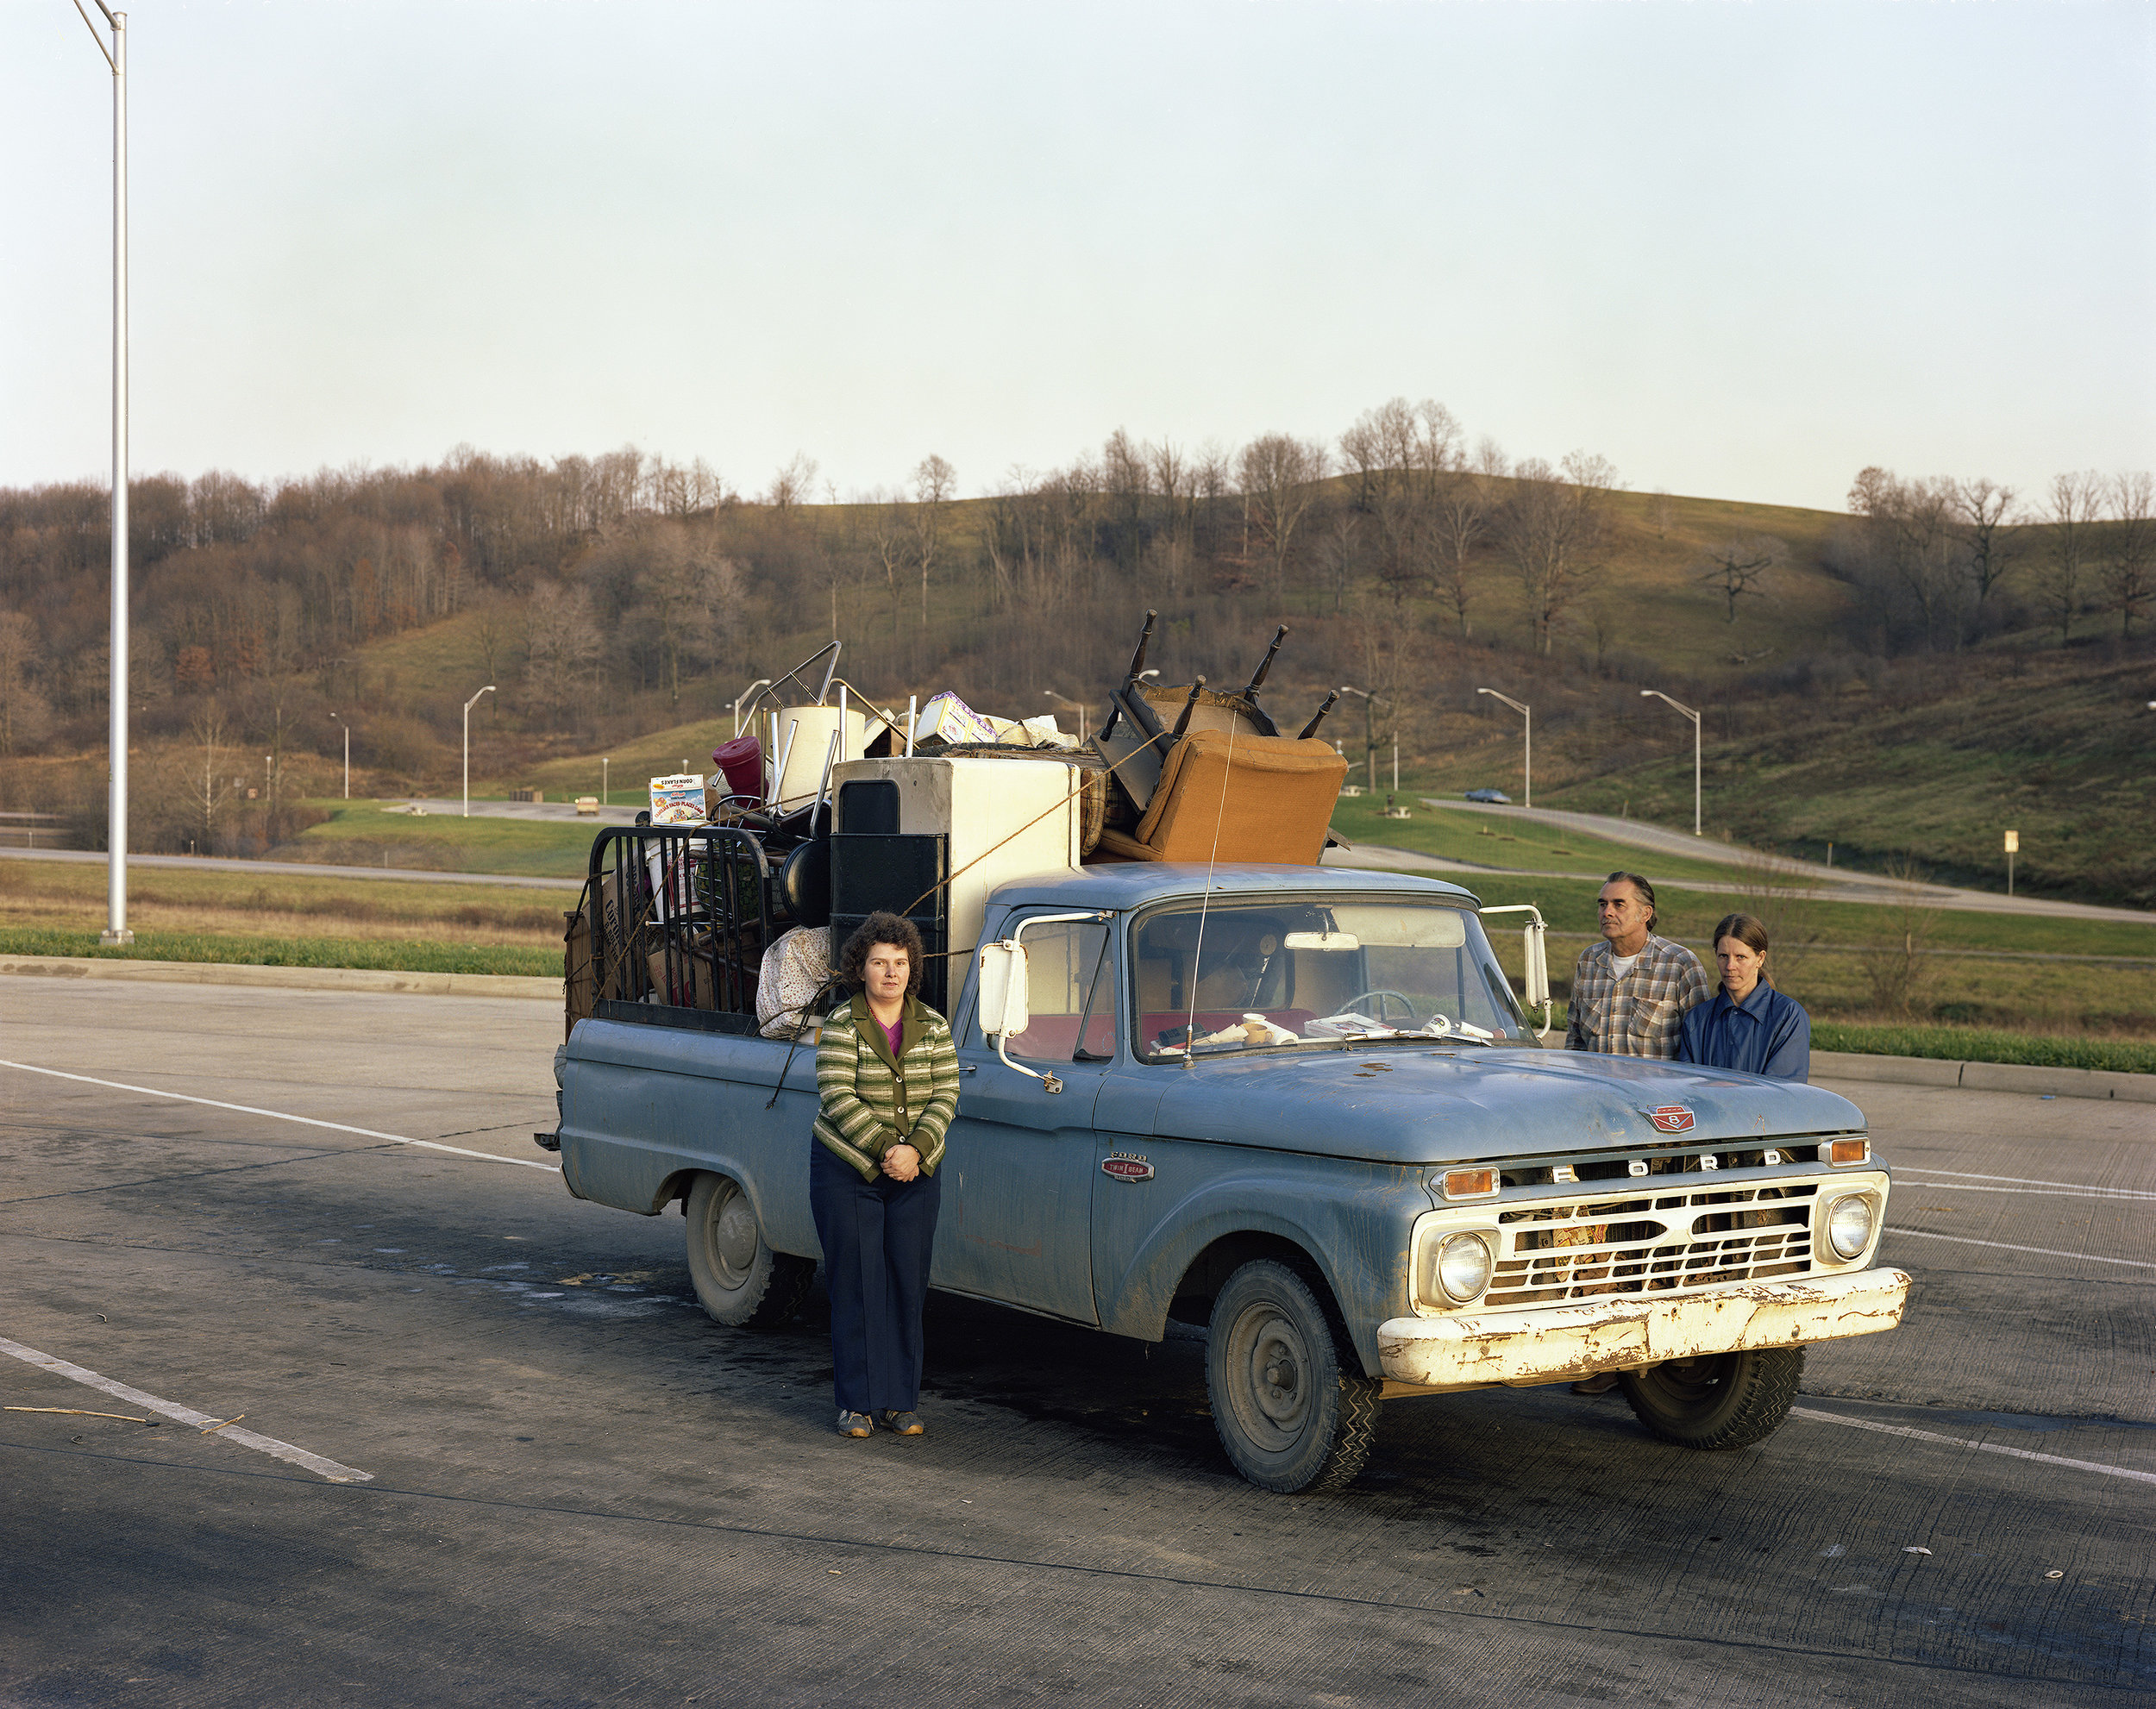  Interstate 79, Bridgeport, West Virginia, March 1983